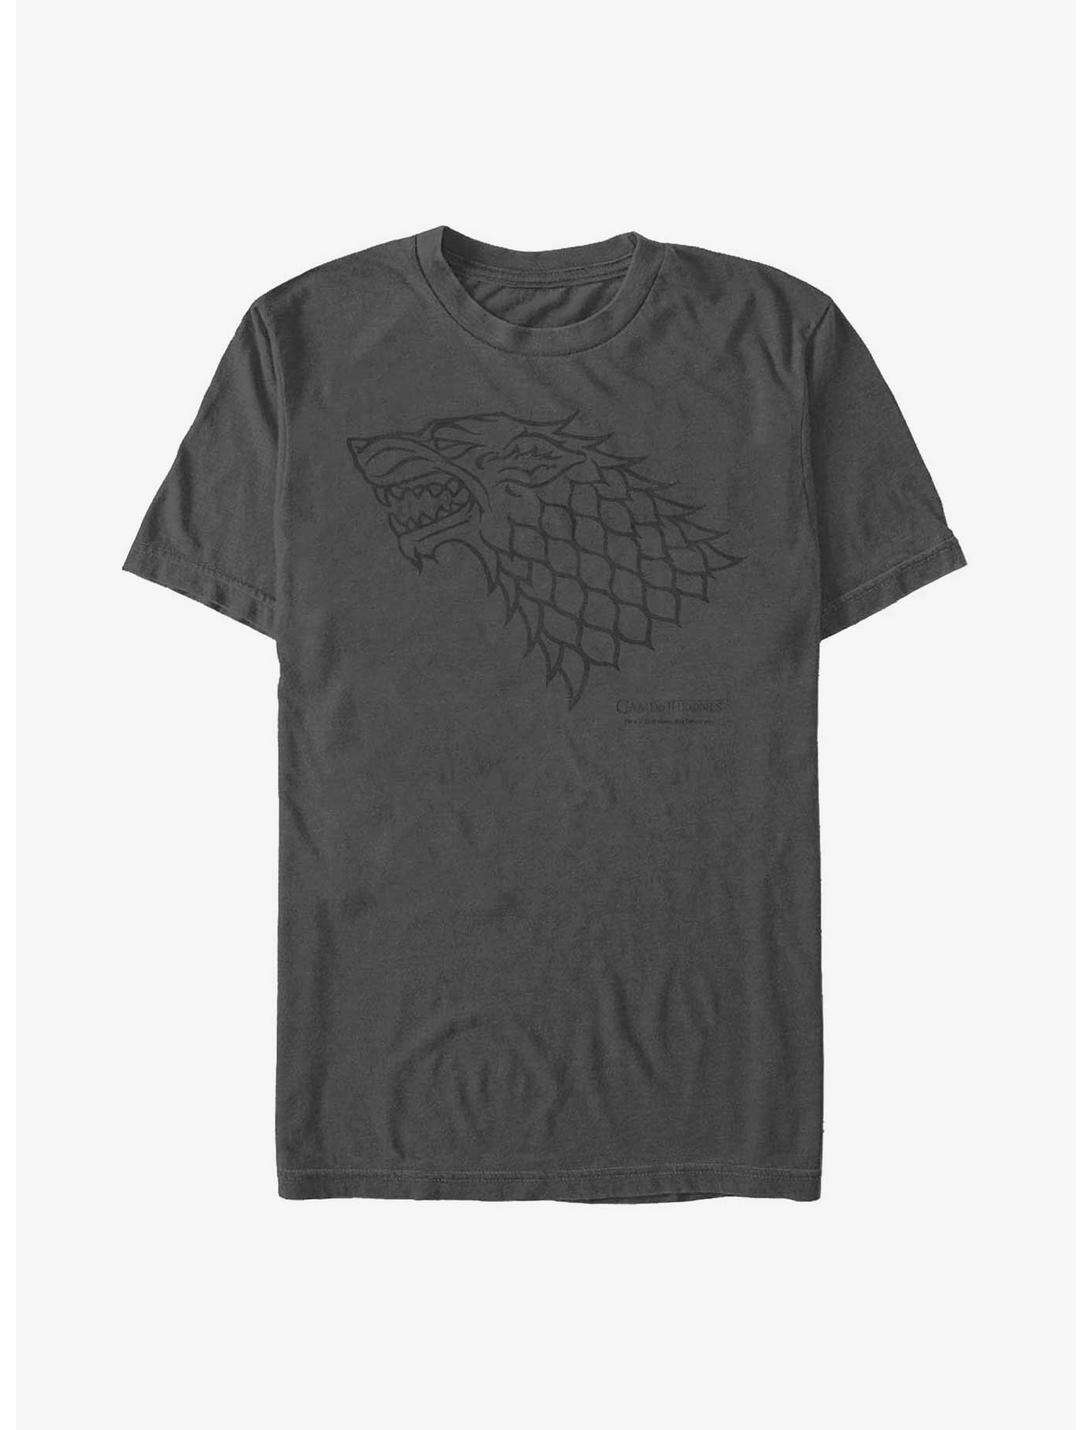 Game Of Thrones House Stark Emblem T-Shirt, CHARCOAL, hi-res